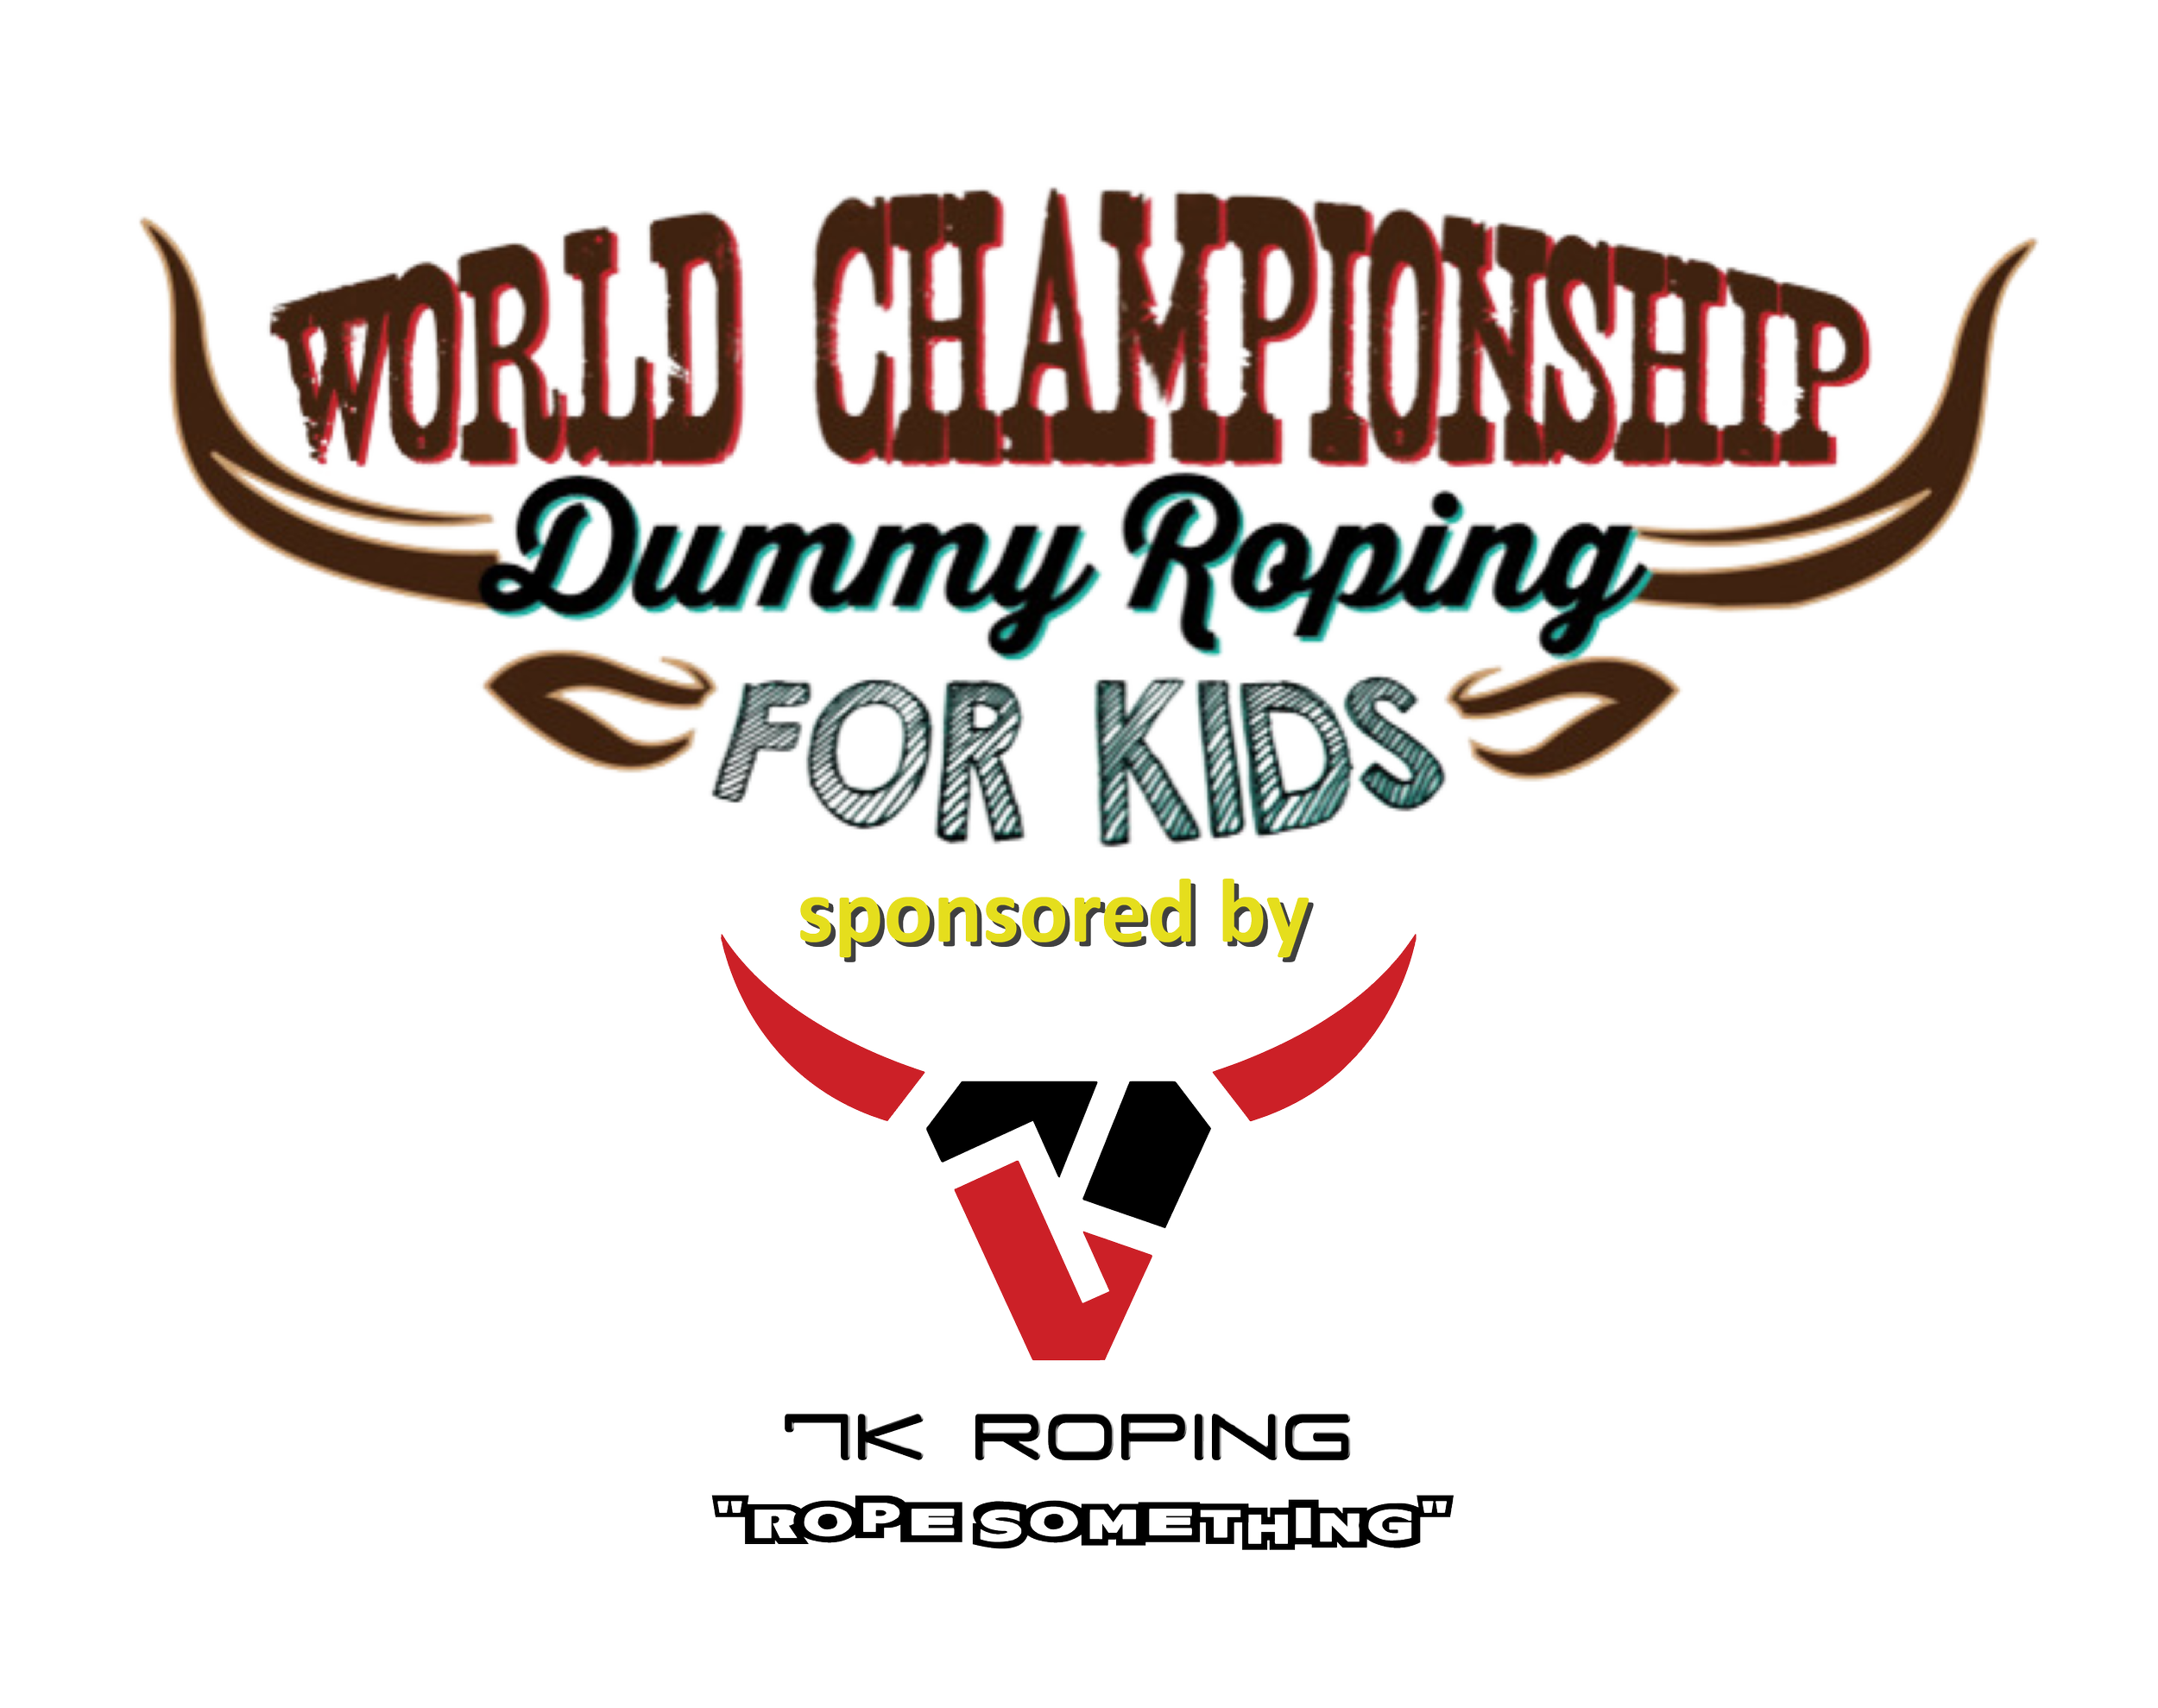 World Championship Dummy Roping